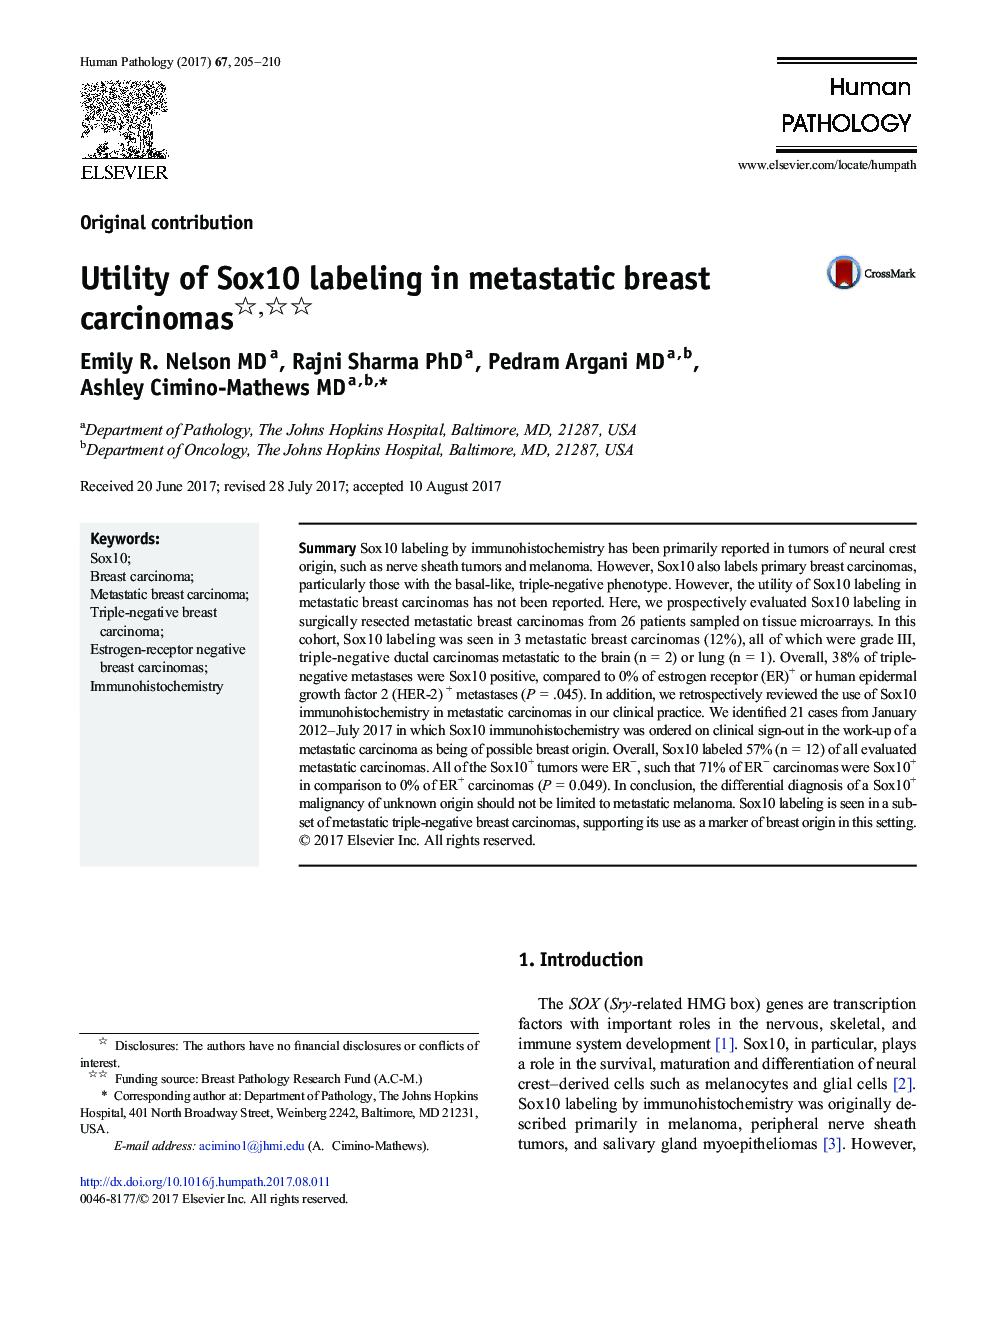 Original contributionUtility of Sox10 labeling in metastatic breast carcinomas